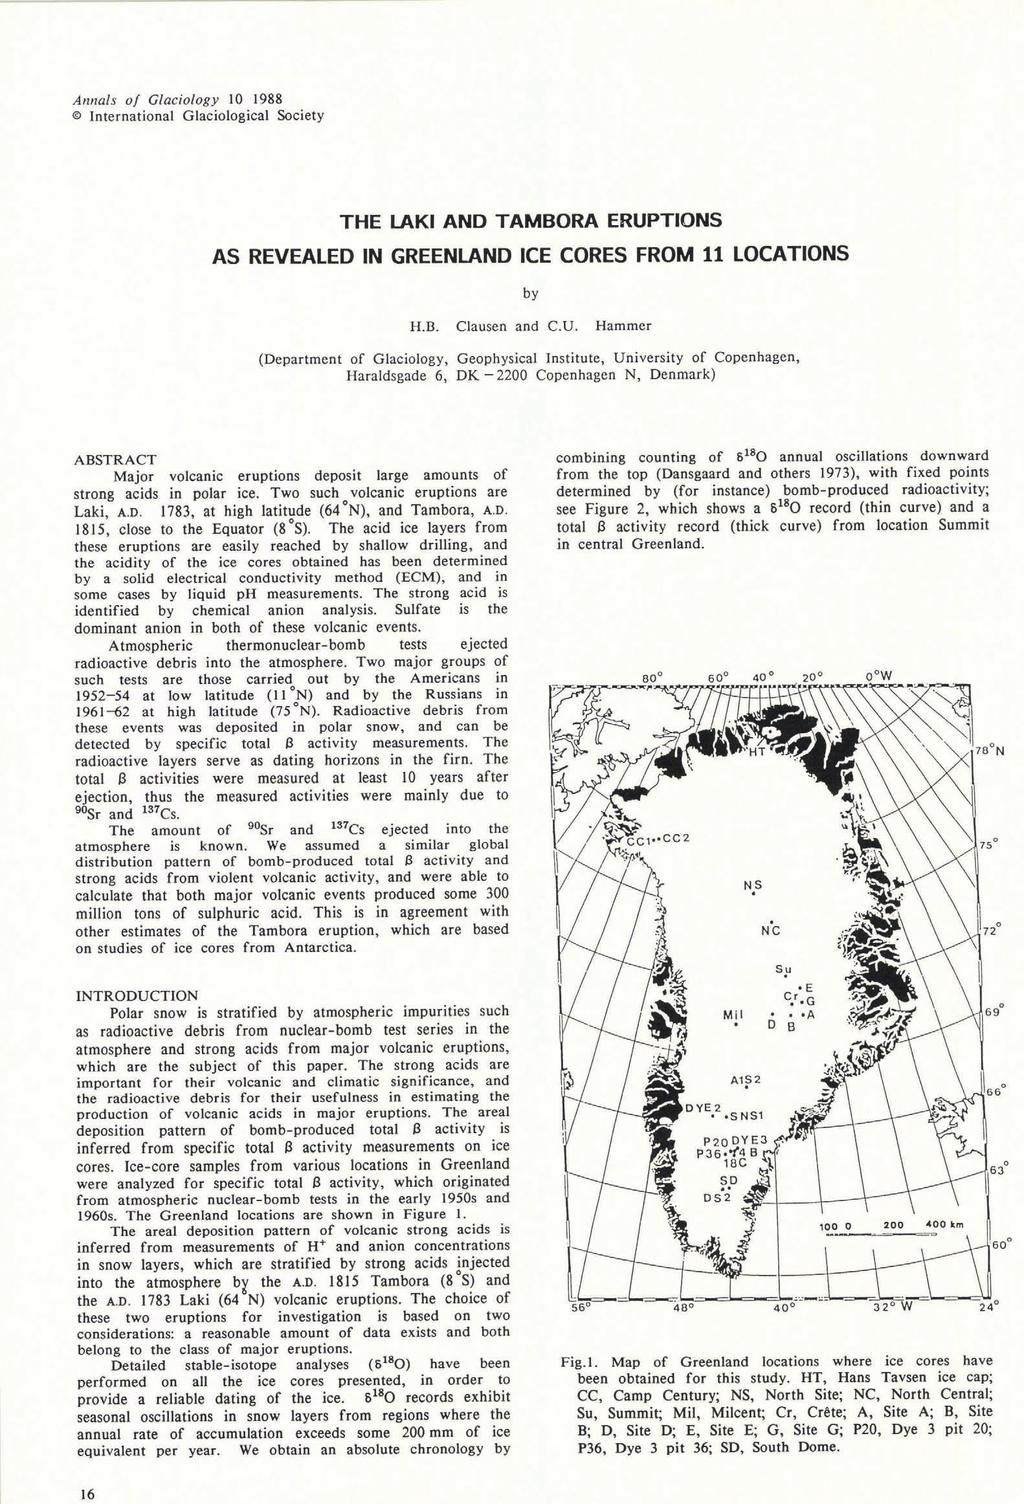 Annals of Glaciology 1988 International Glaciological Society THE LAKI AND TAMBORA ERUP